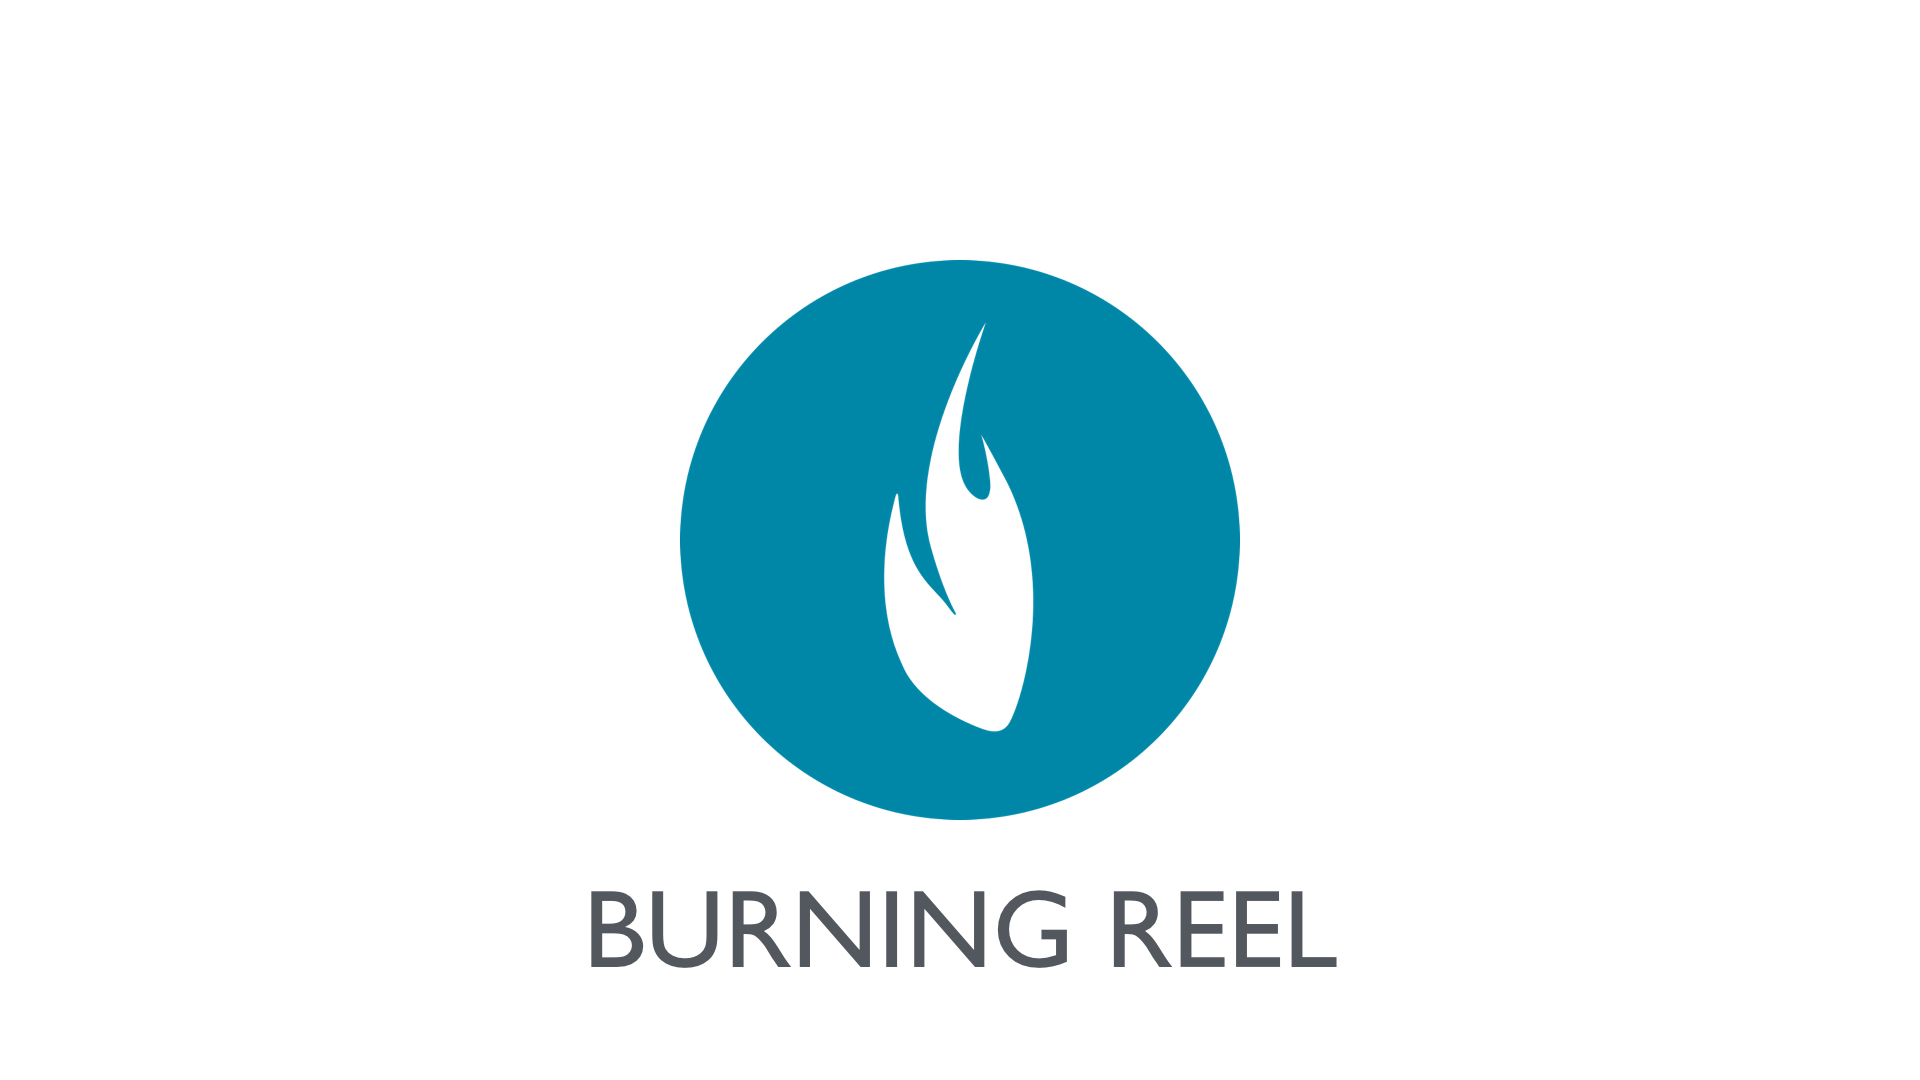 Burning reel logo.001.jpeg